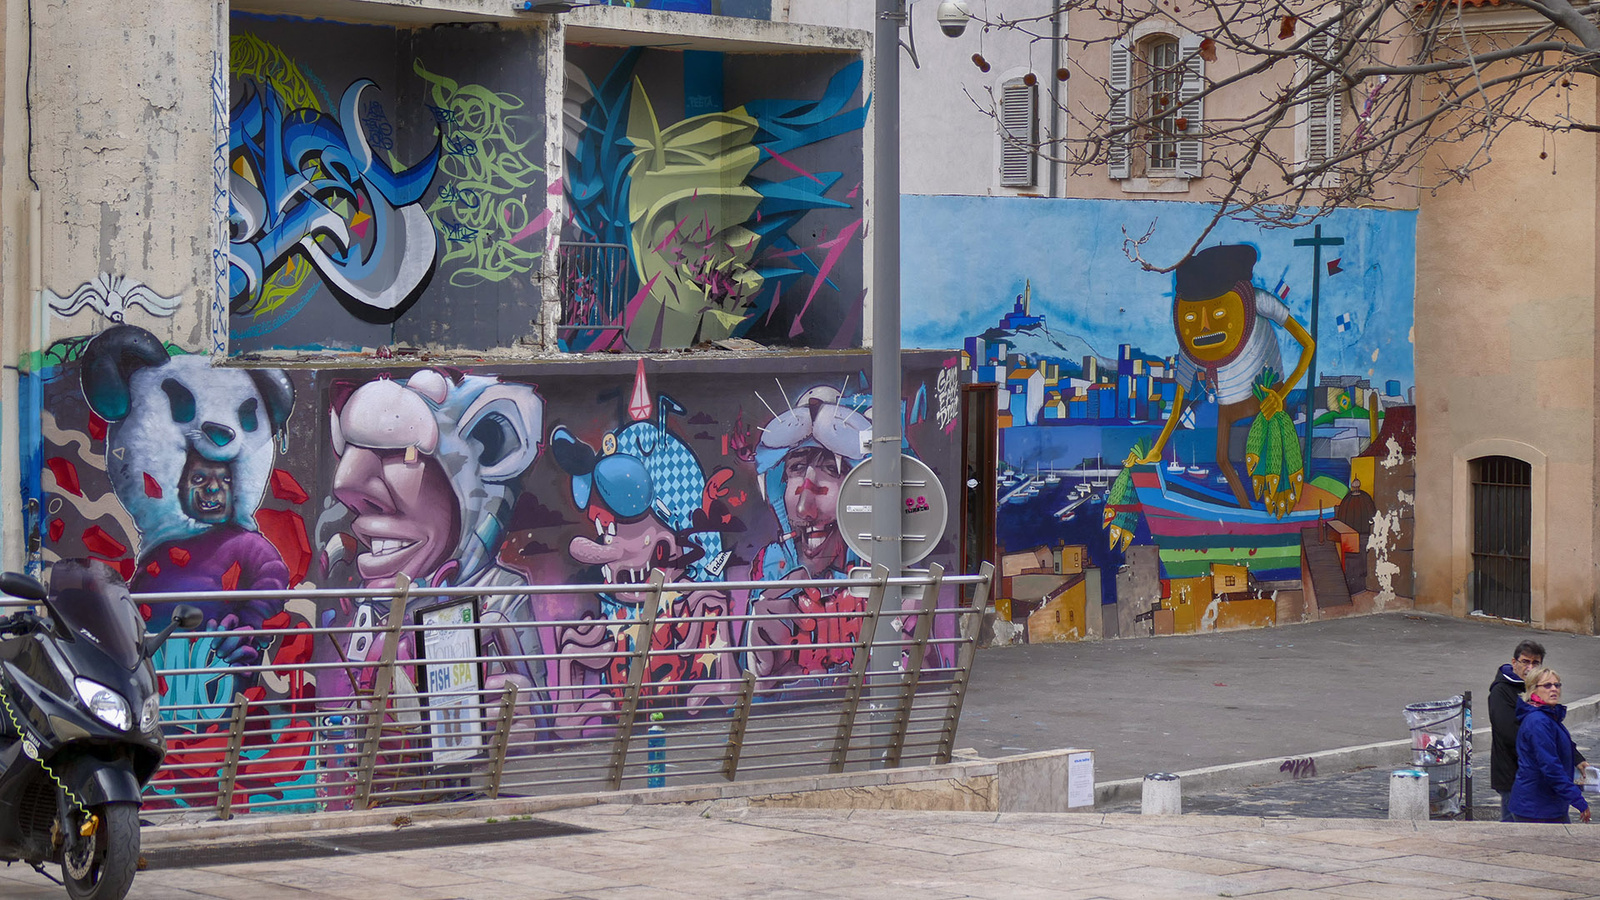 Costa - Marseille - Rue de Petit Puits - Graffiti